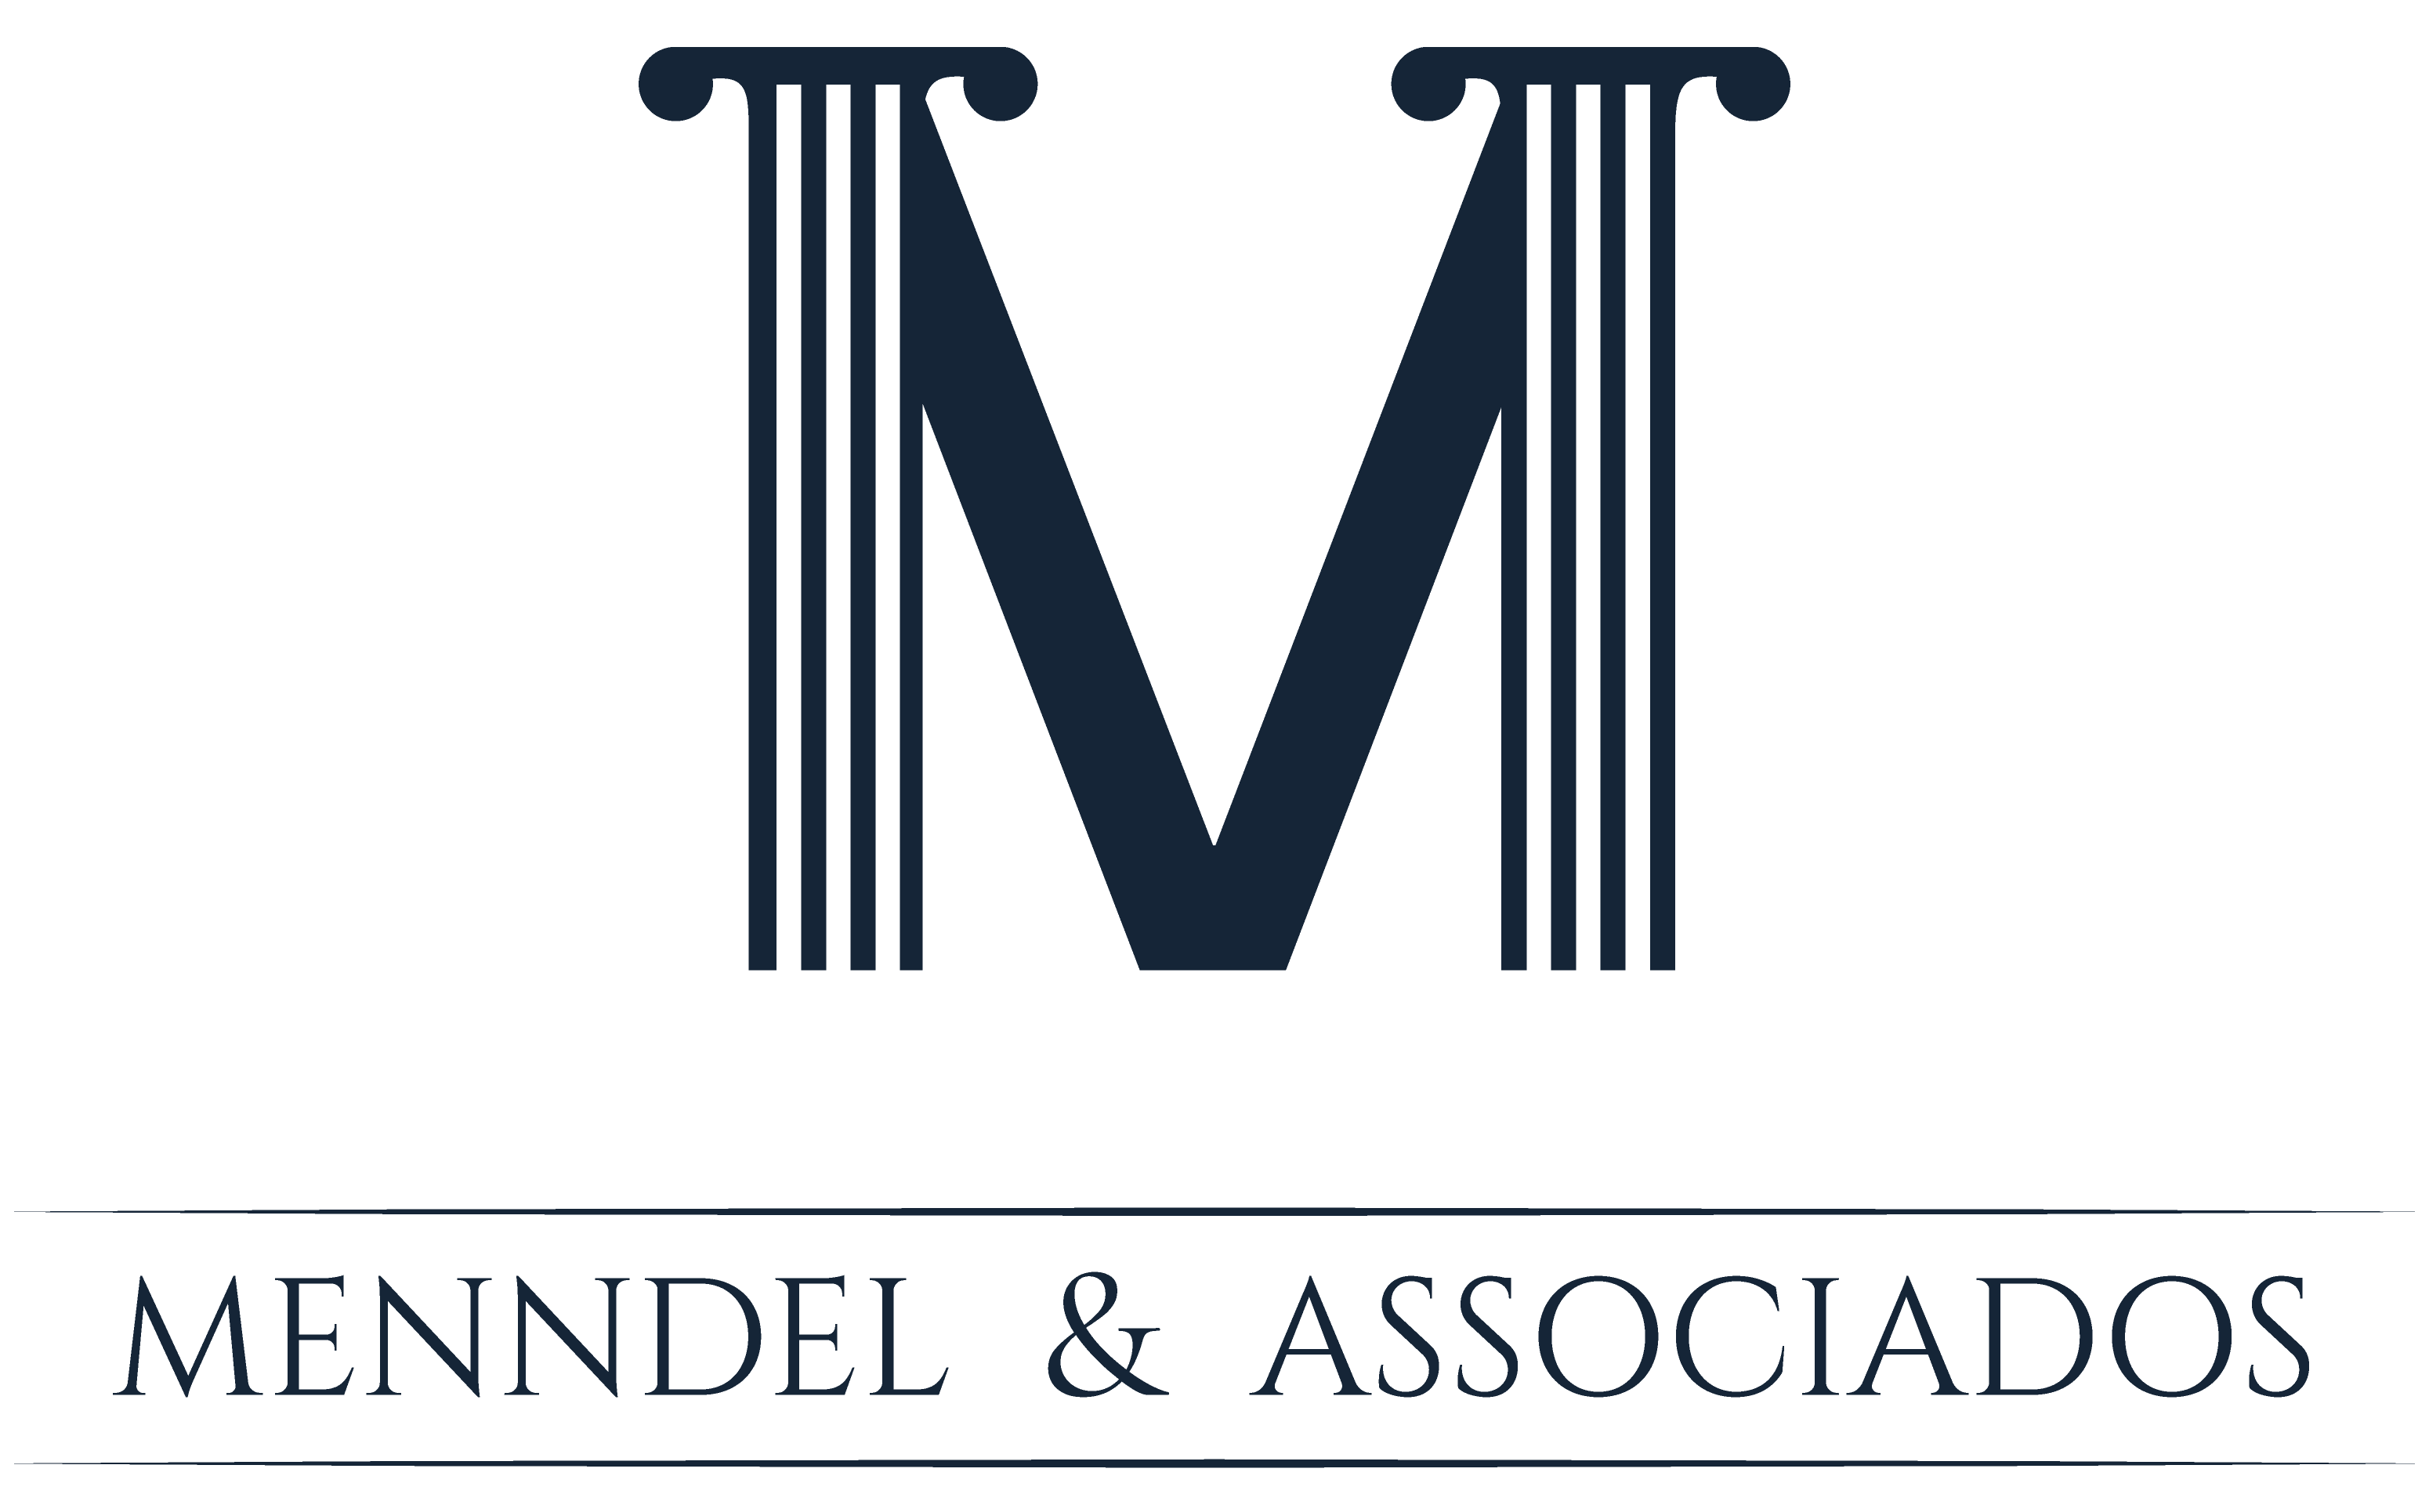 MENNDEL logo